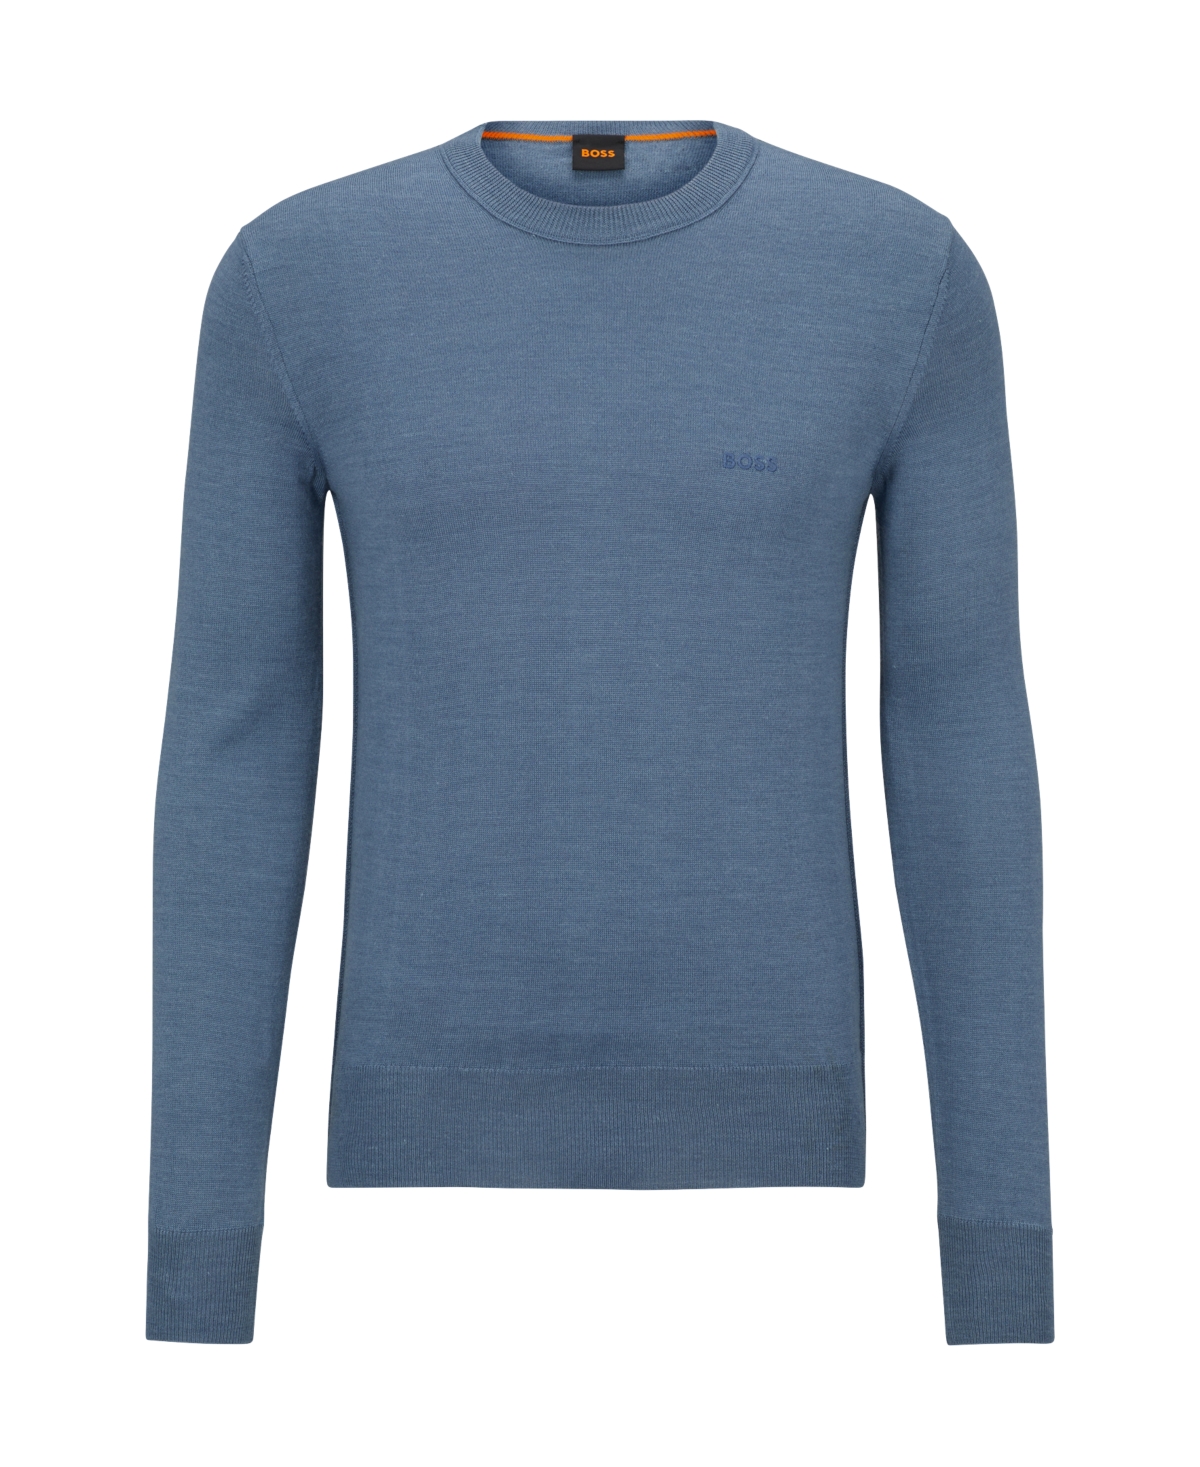 Hugo Boss Boss By  Men's Regular-fit Tonal Logo Crew-neck Sweater, Created For Macy's In Bright Blue